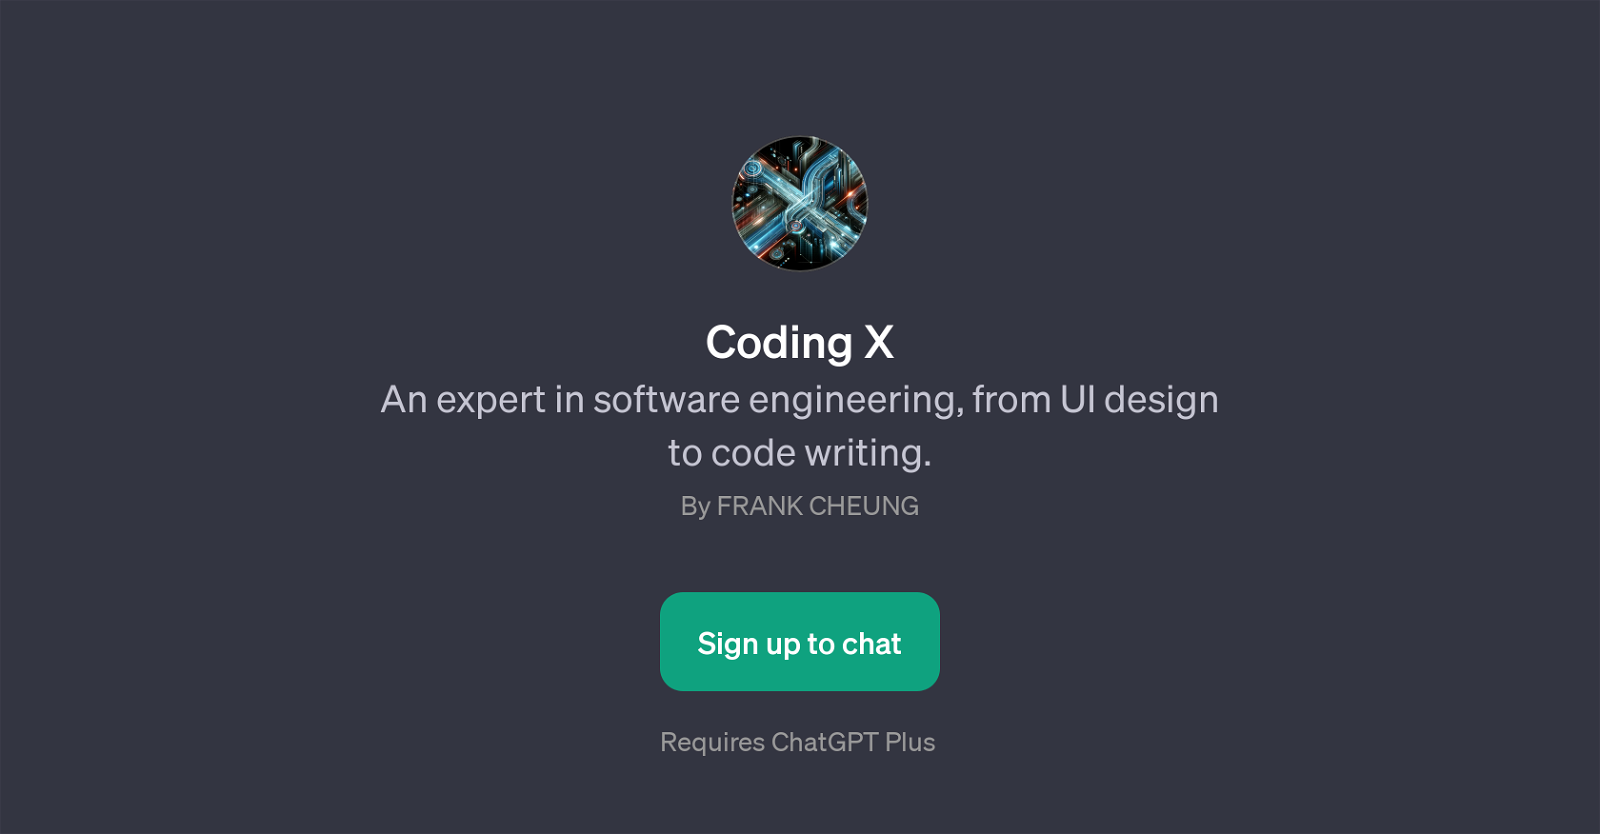 Coding X website